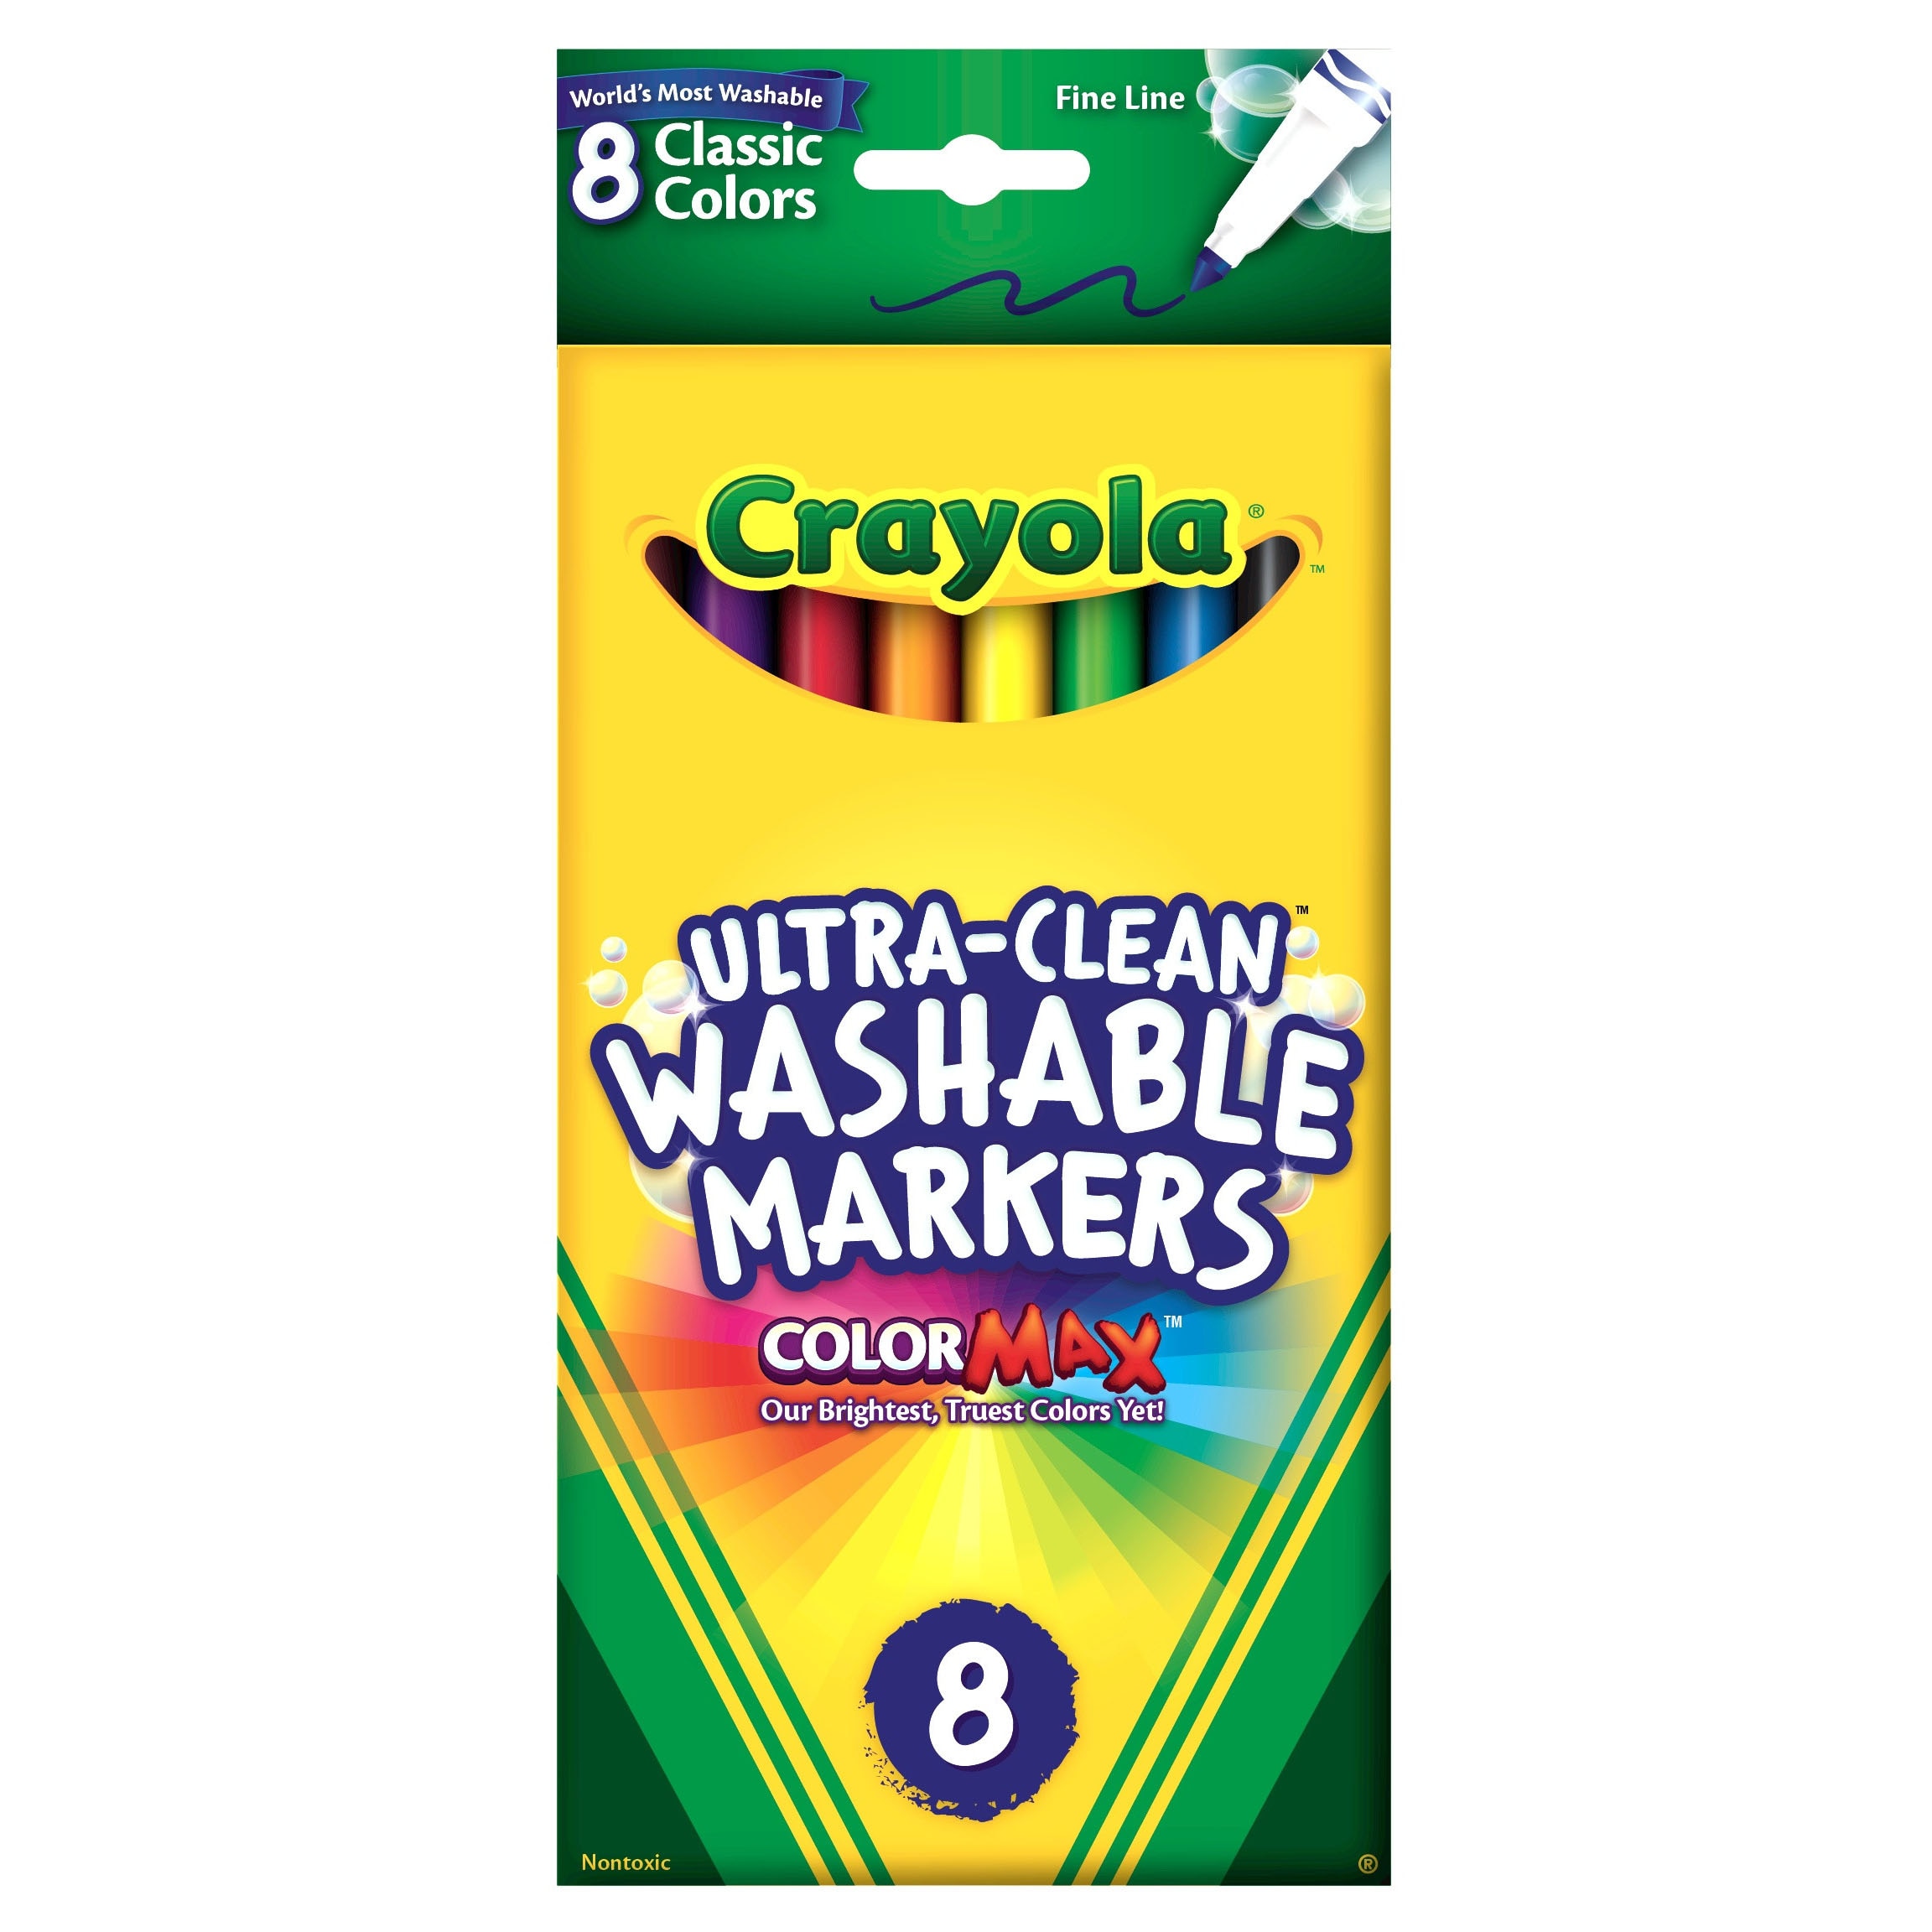 Crayola Washable Marker Set, 8-Colors, Fine, Classic